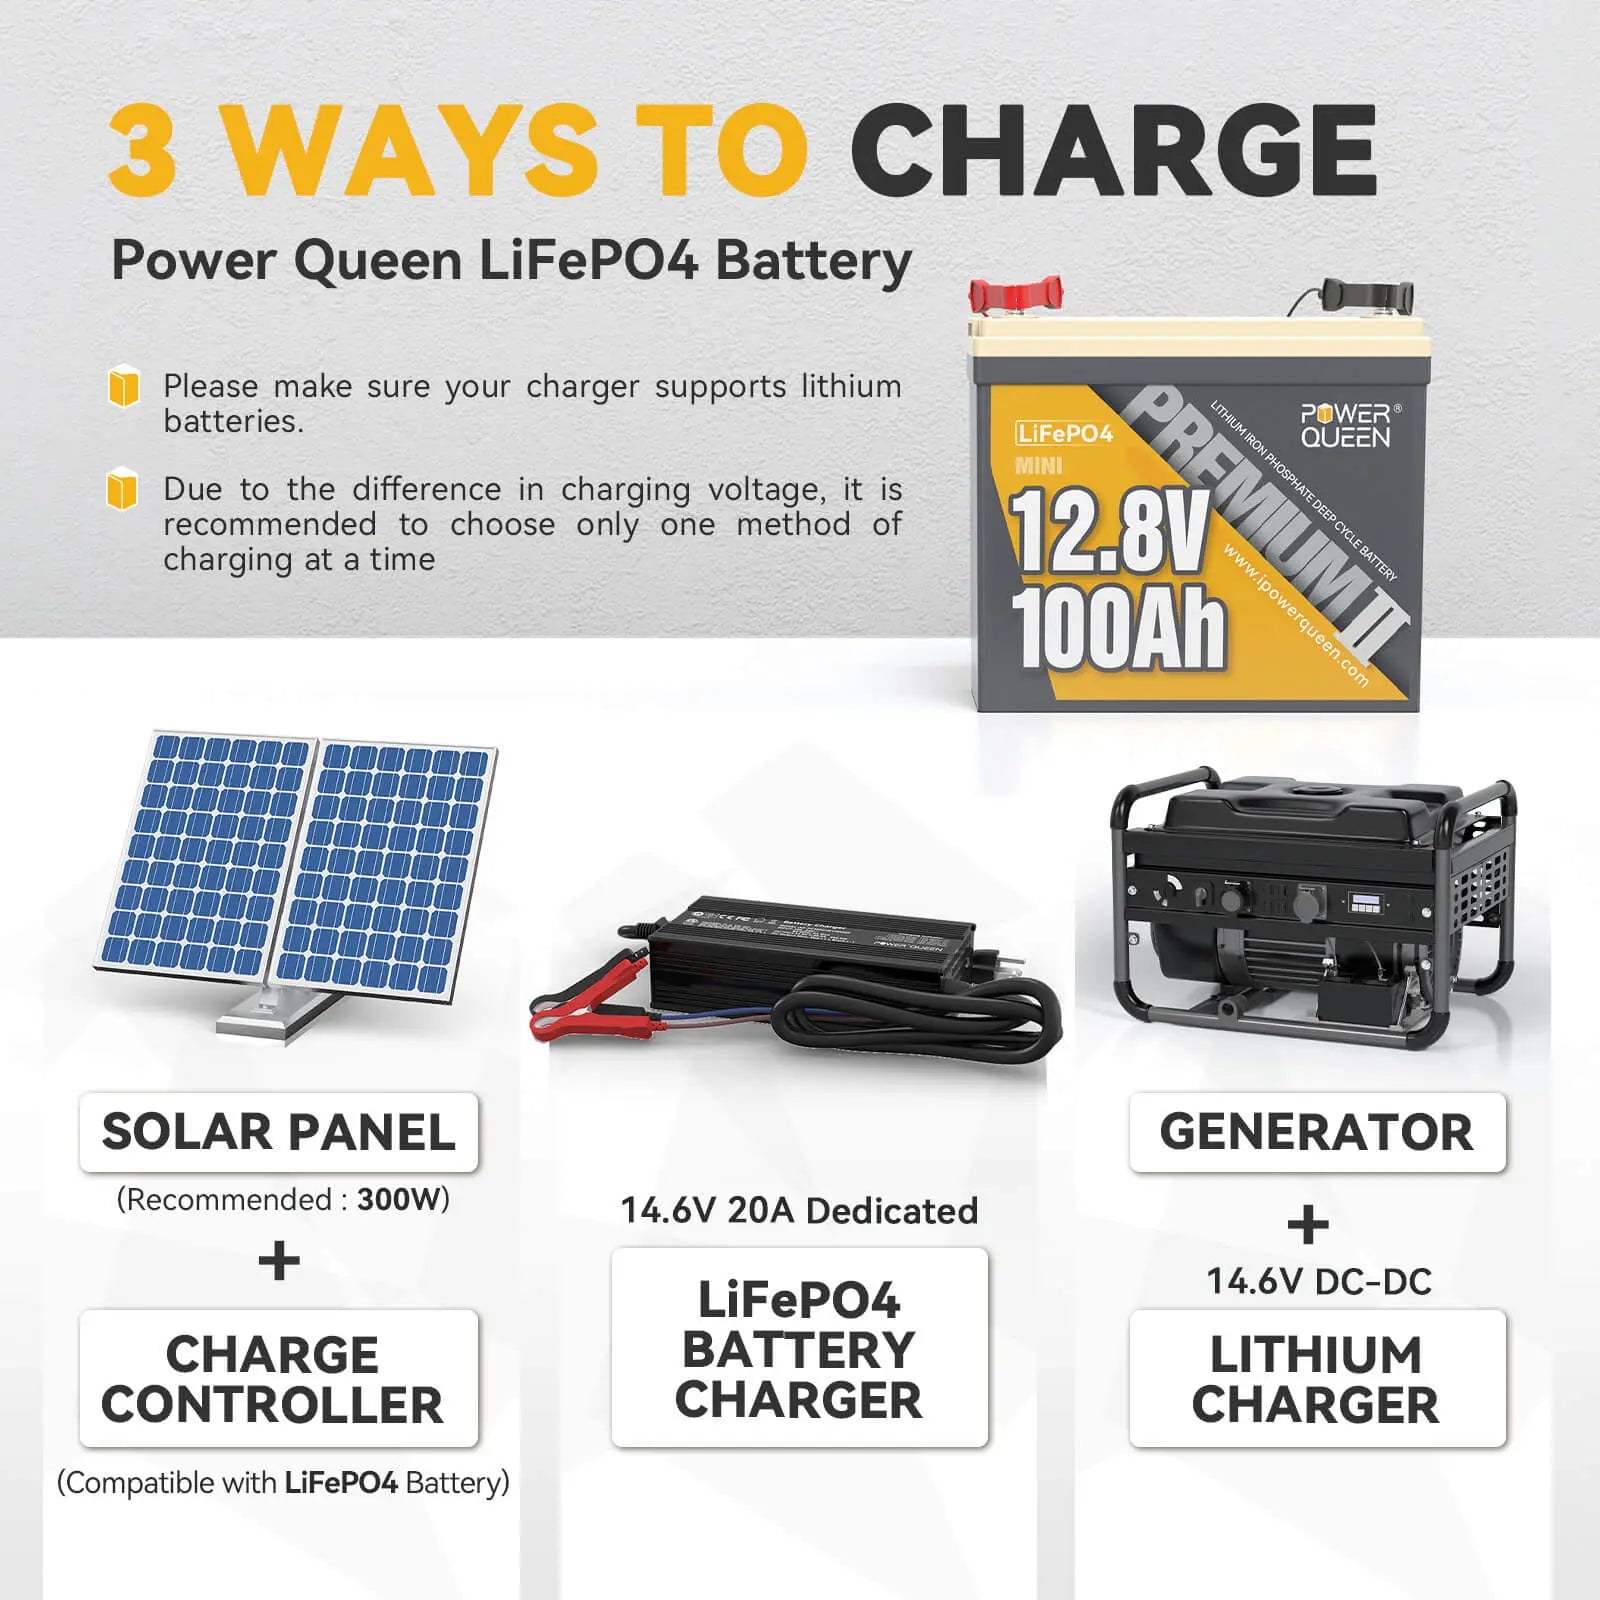 Power Queen 12V 100Ah Mini LiFePO4 Battery